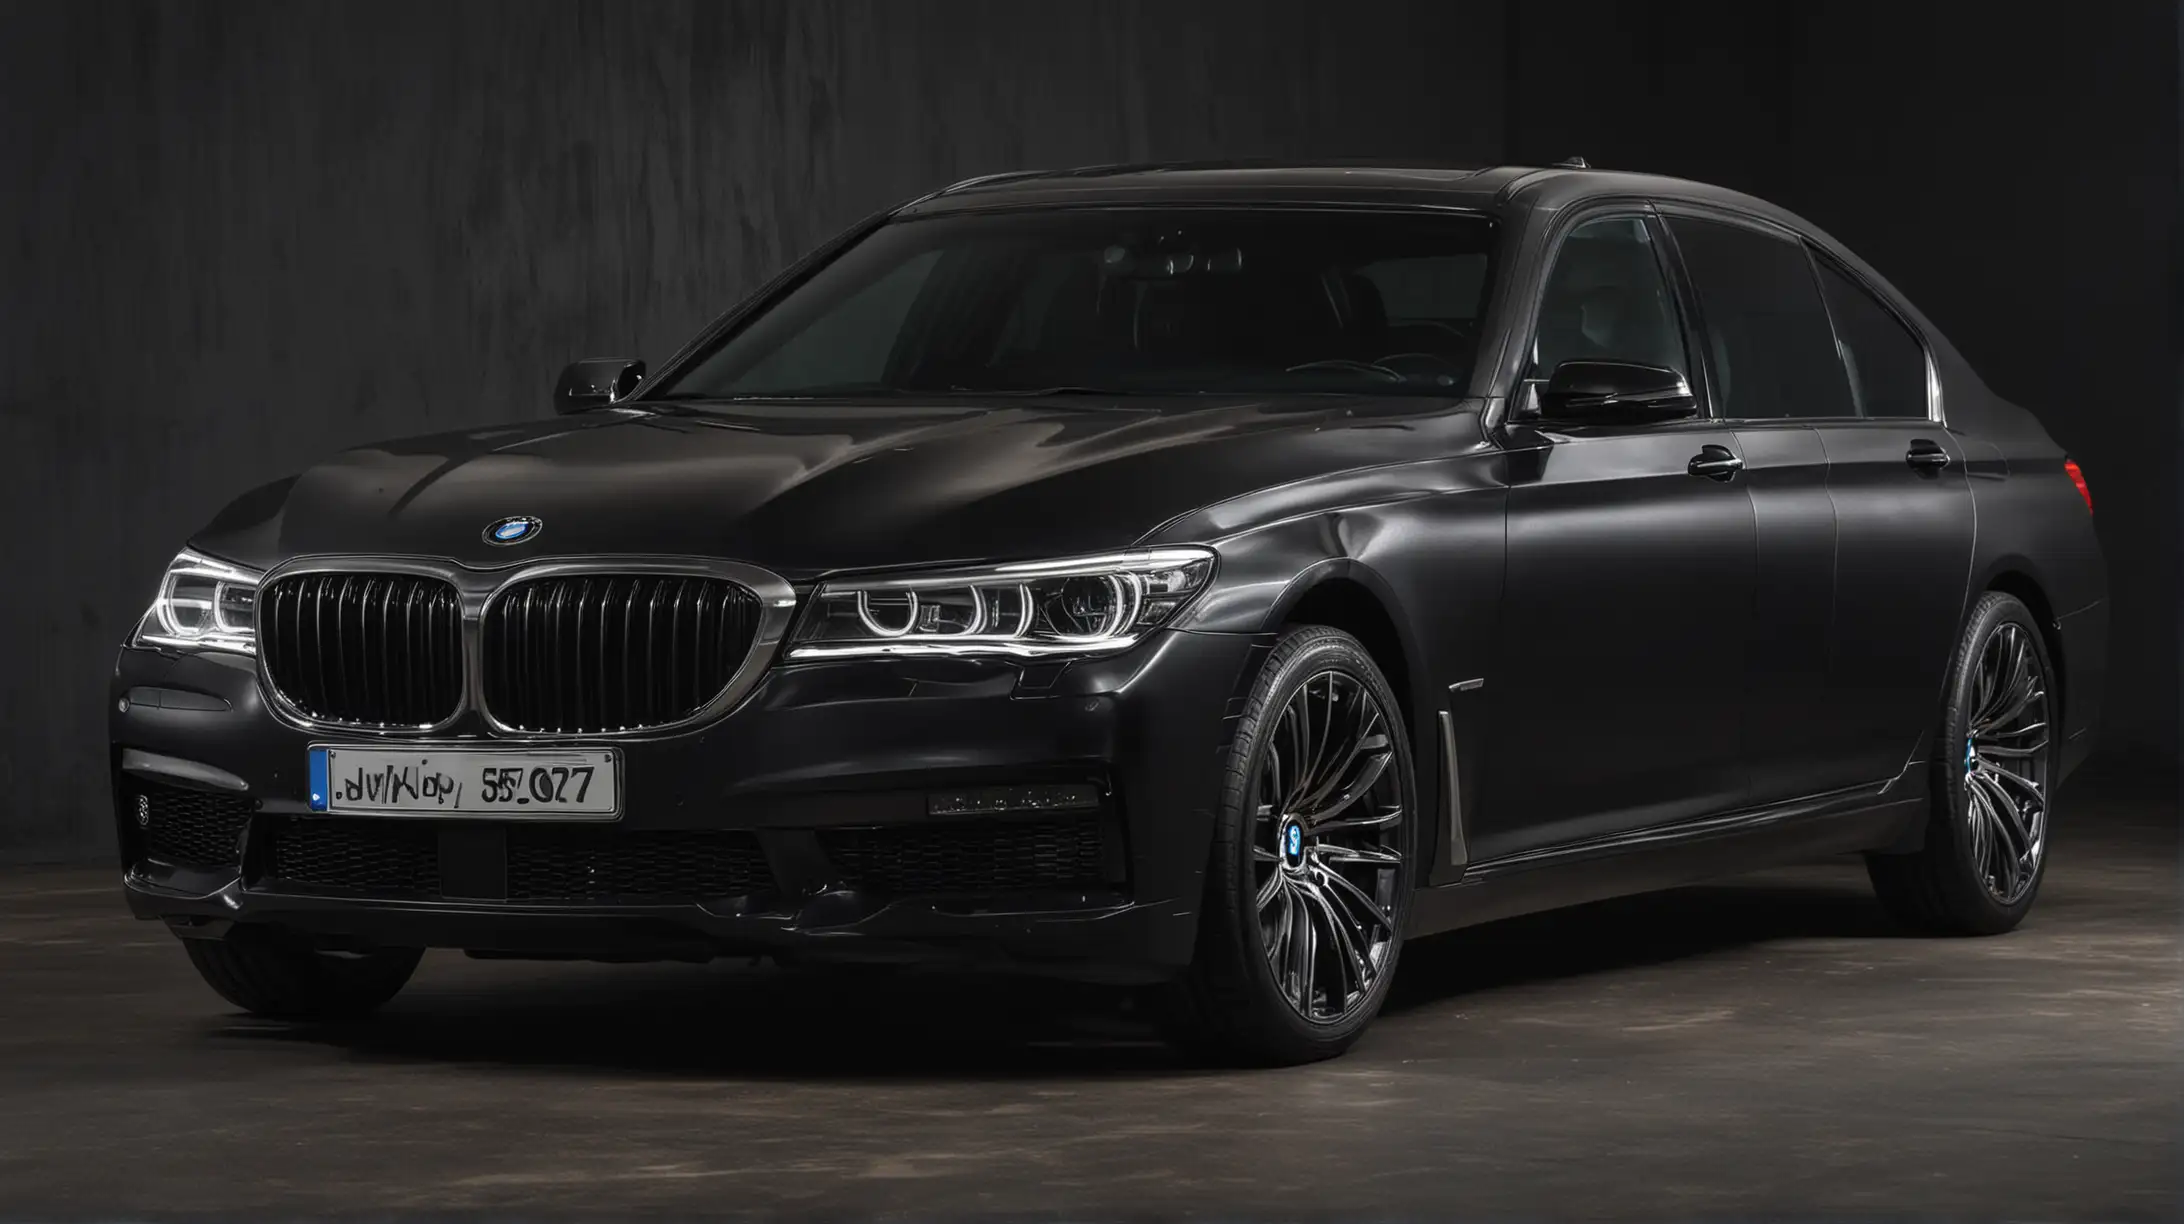 BMW 7 Series Luxury Car with Illuminated Headlights on Black Background